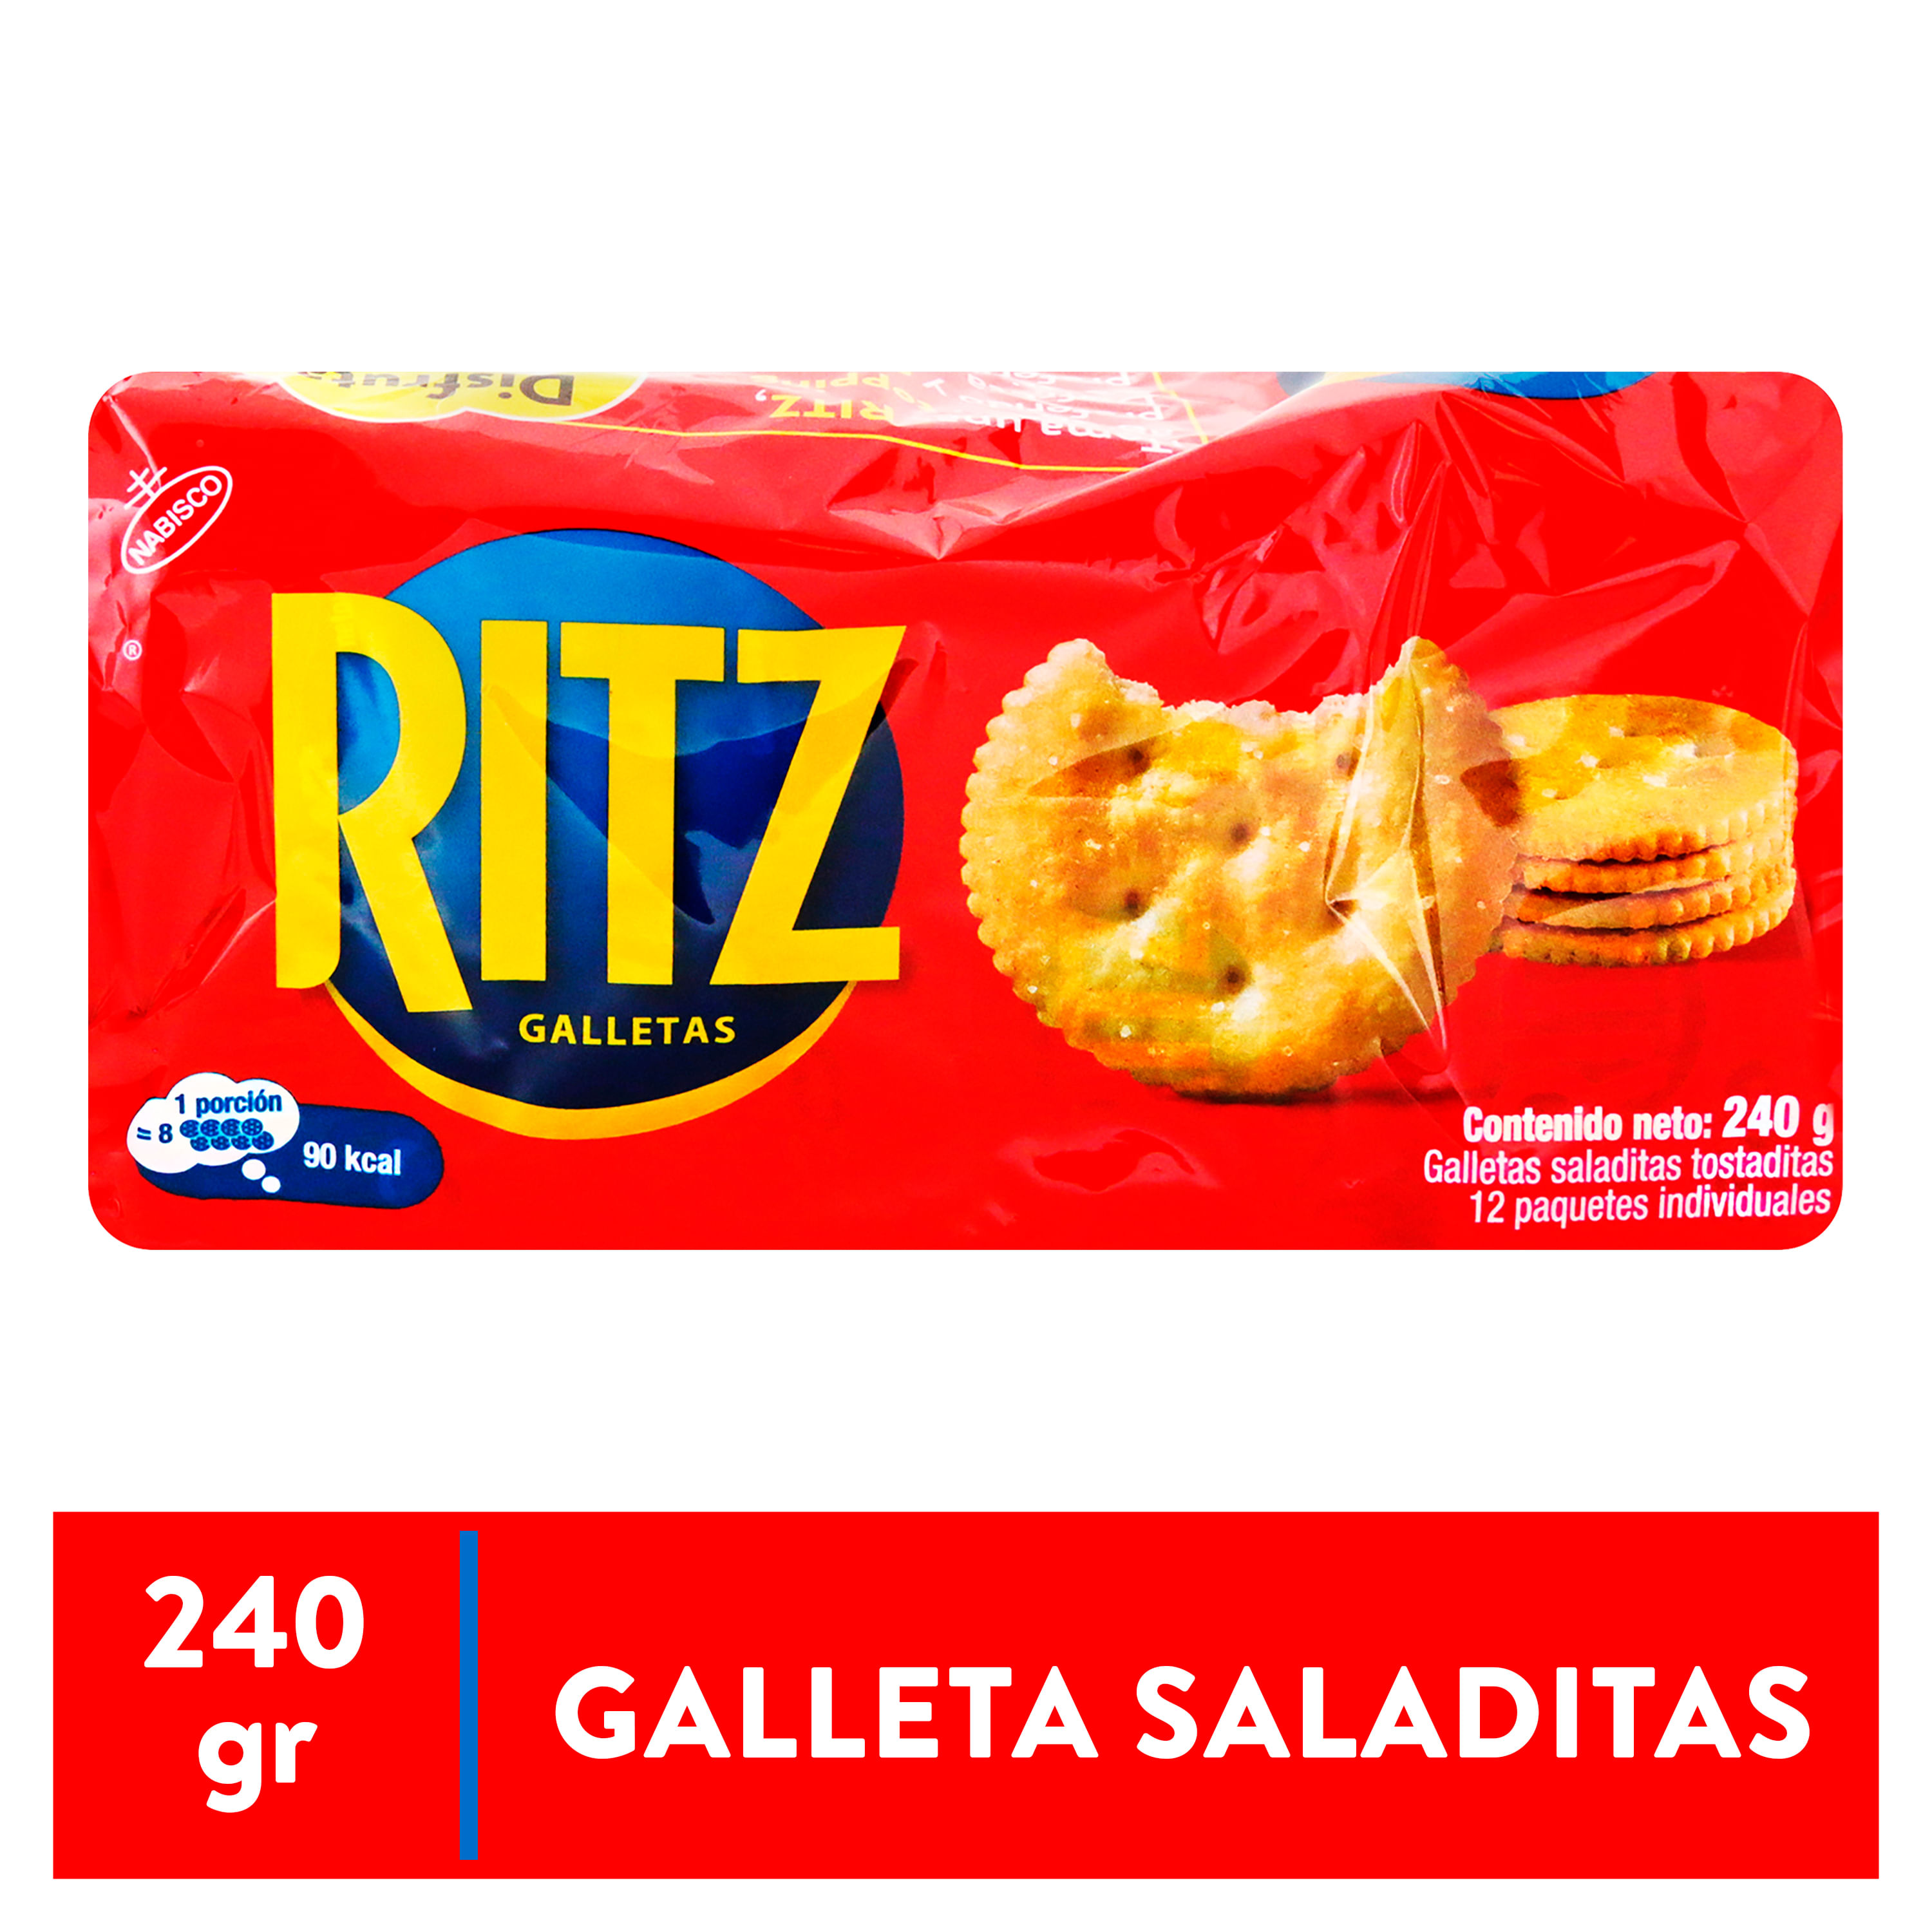 Comprar Galletas Saladas Ritz Original 12 Pack - 240g